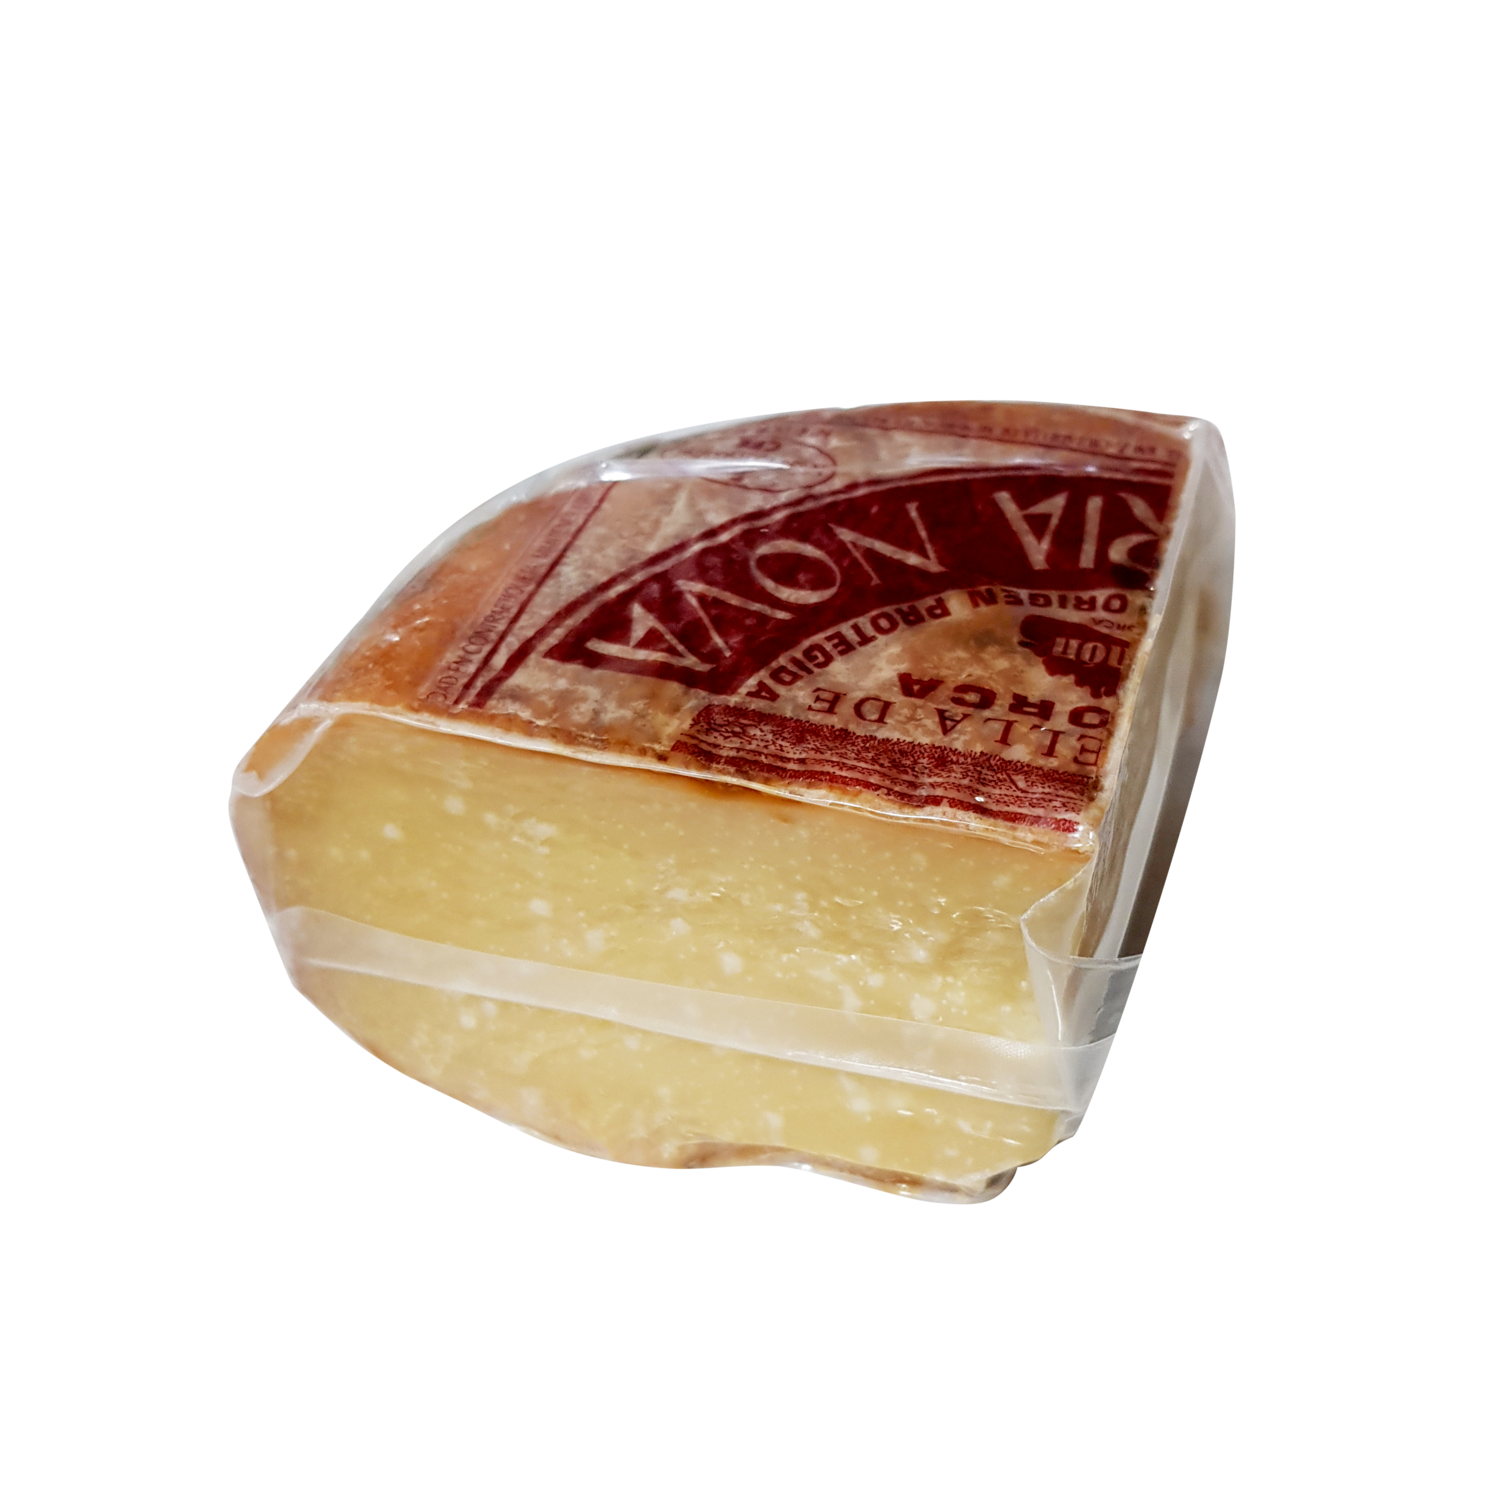 Cavalleria Nova Curado Añejo Mahon Cheese Wedge (Approx. 180g)